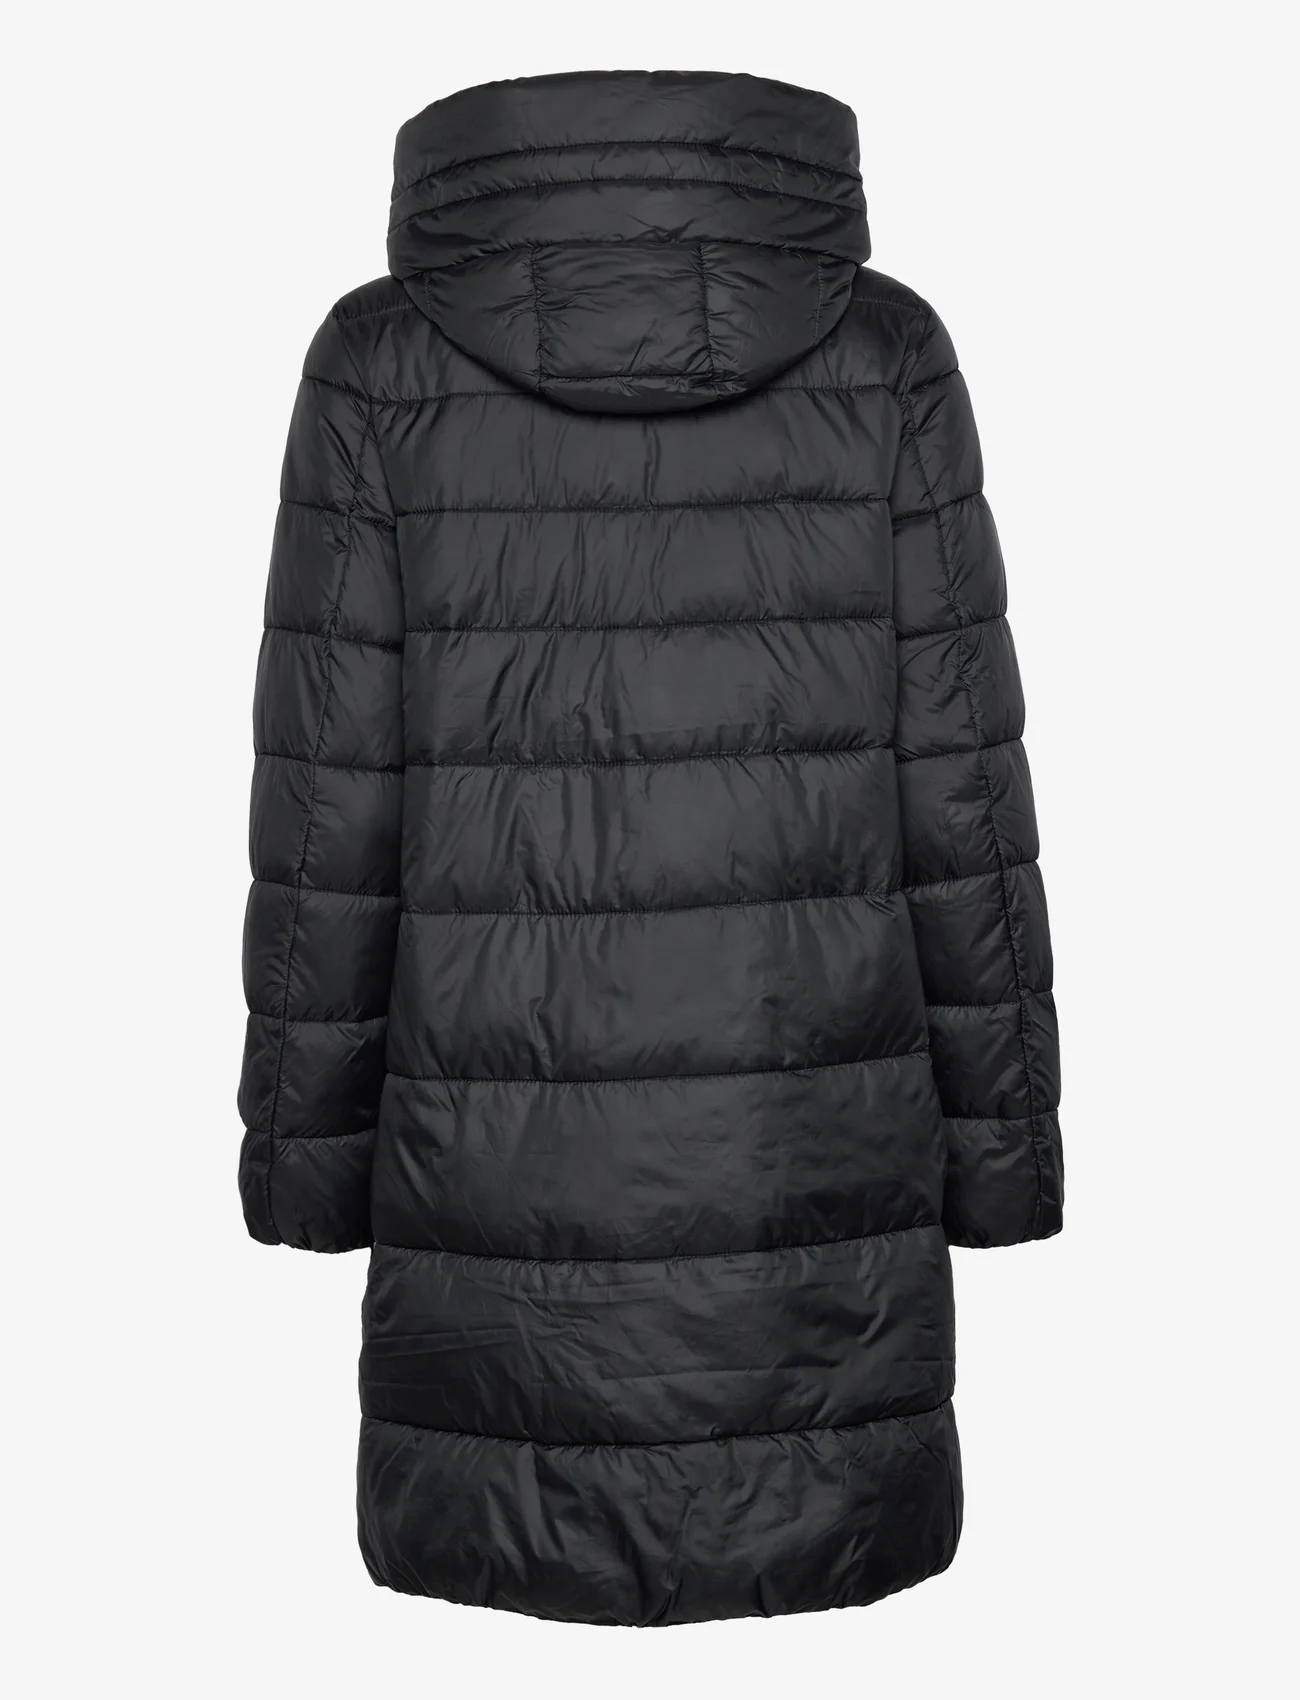 Esprit Casual - Women Coats woven regular - winter jackets - black - 1